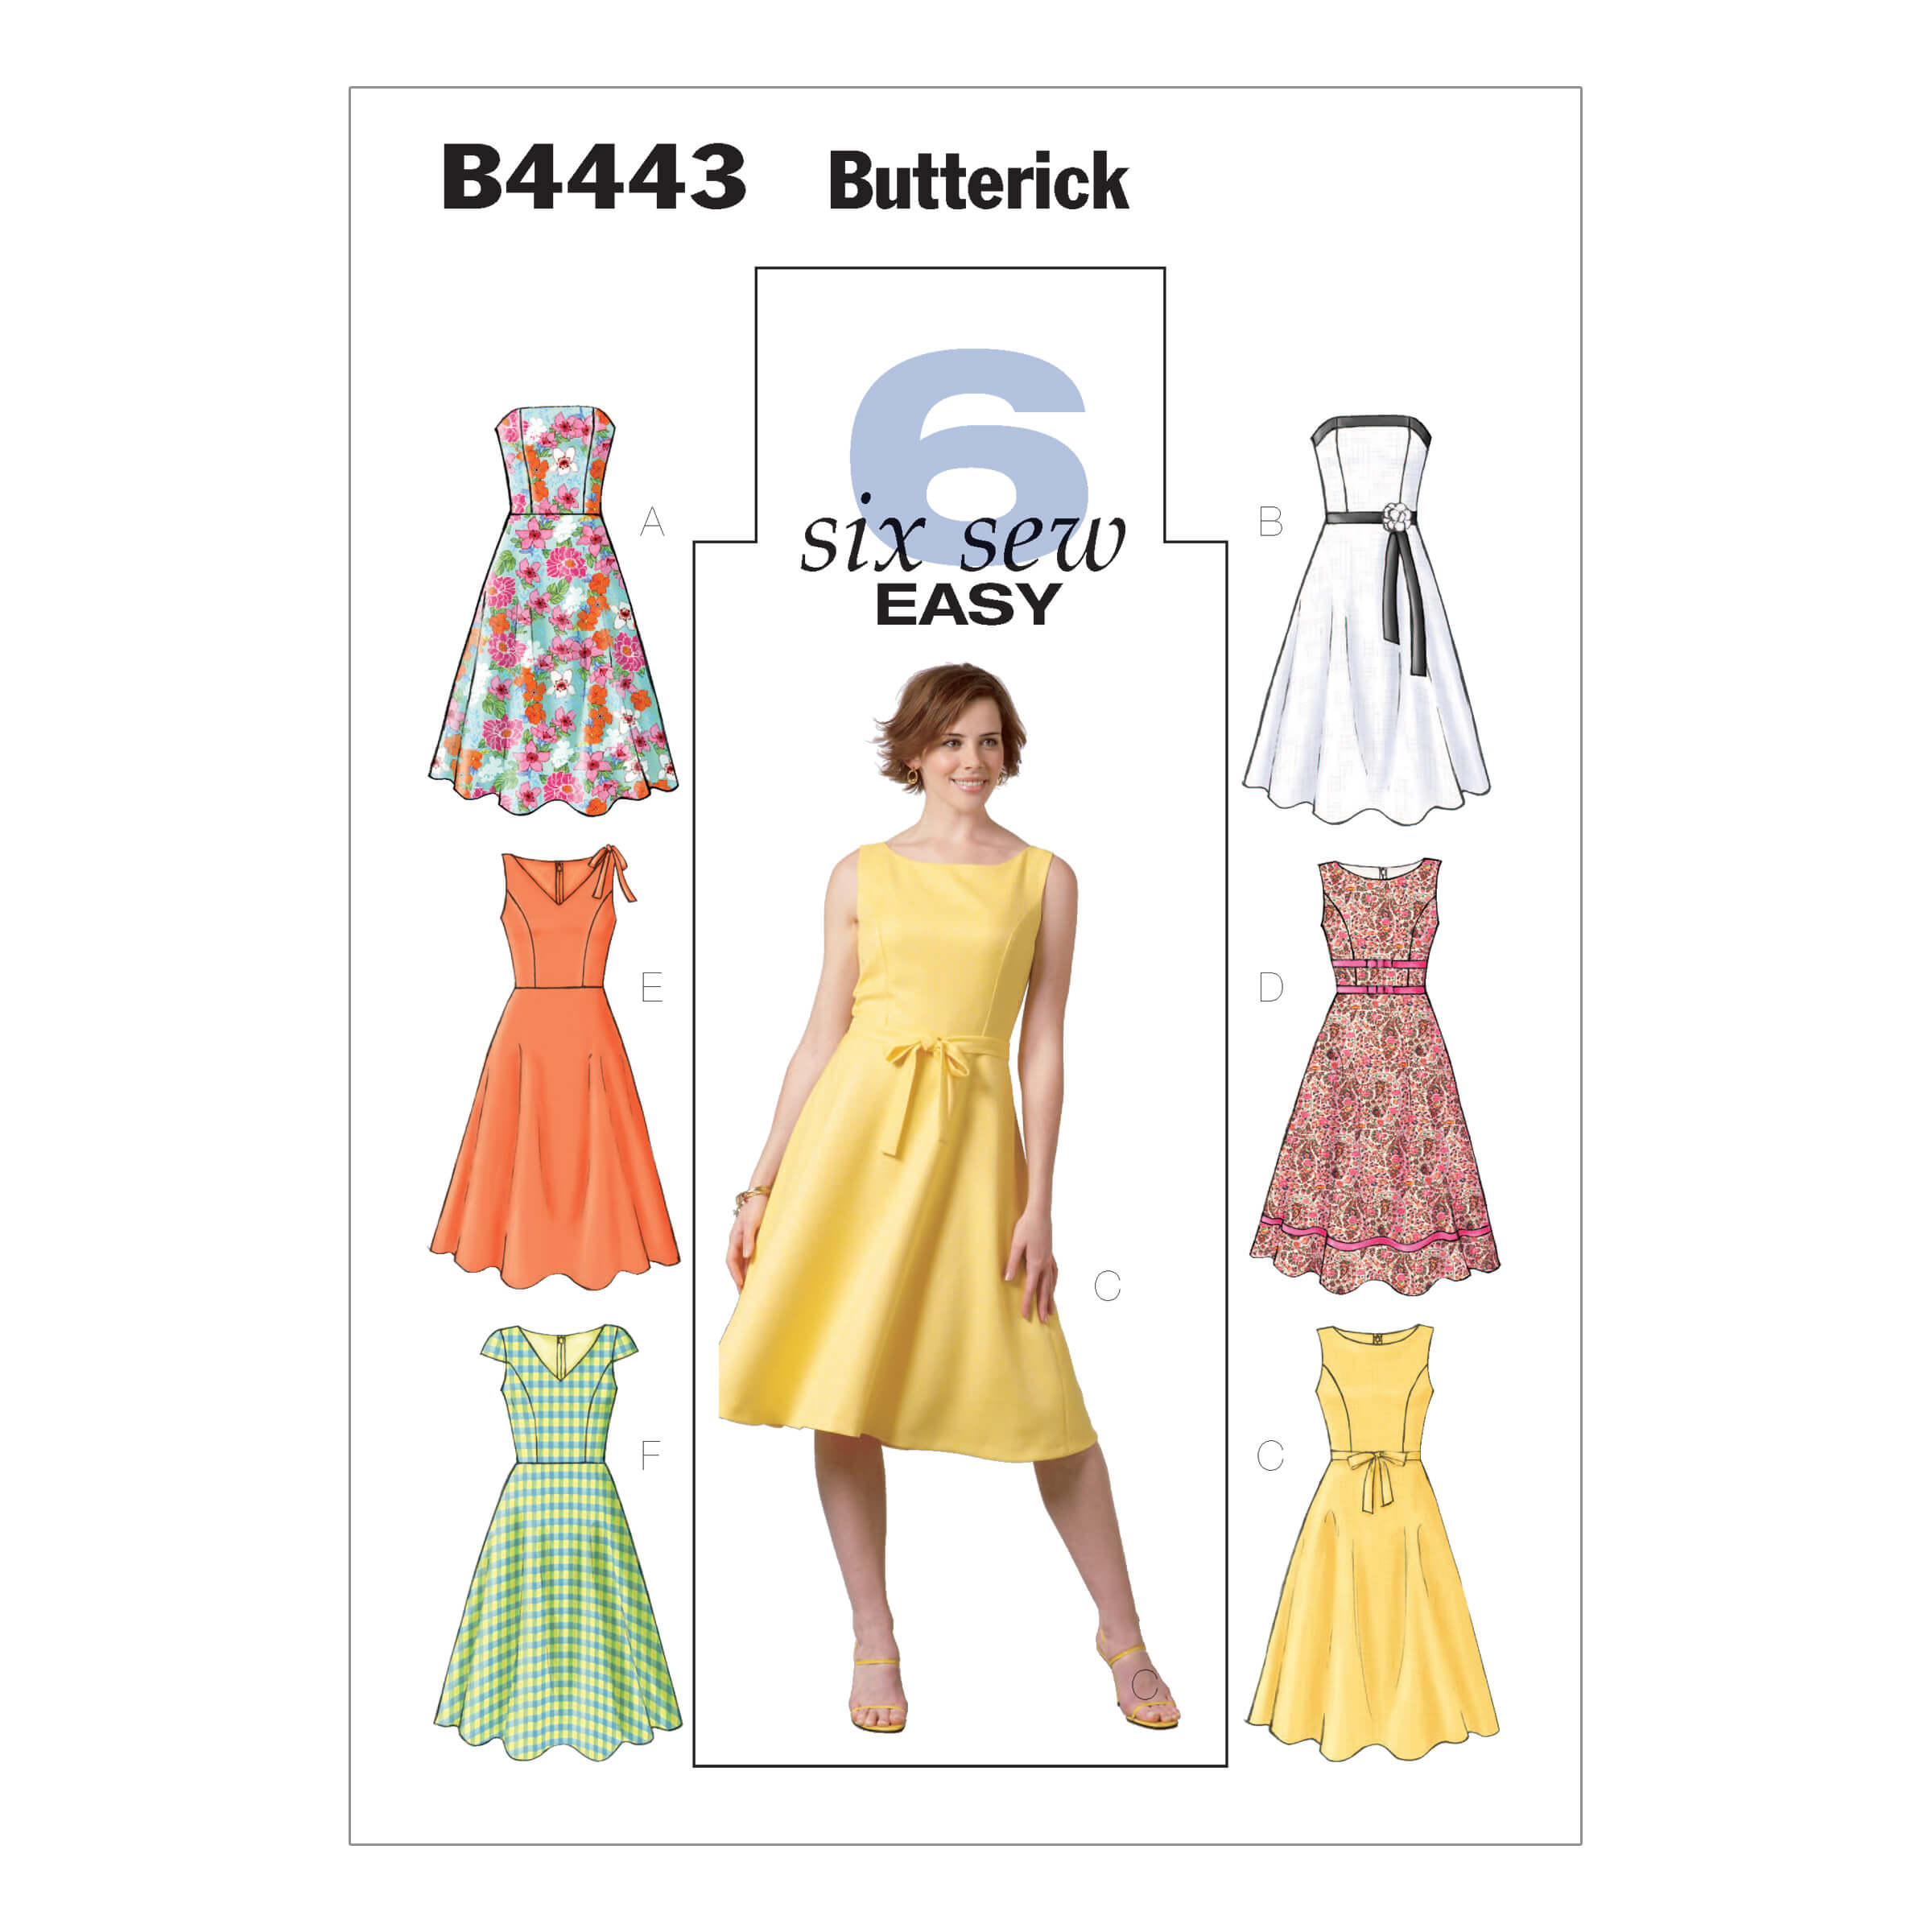 Butterick Sewing Pattern B4443 Misses'/Misses' Petite Dress